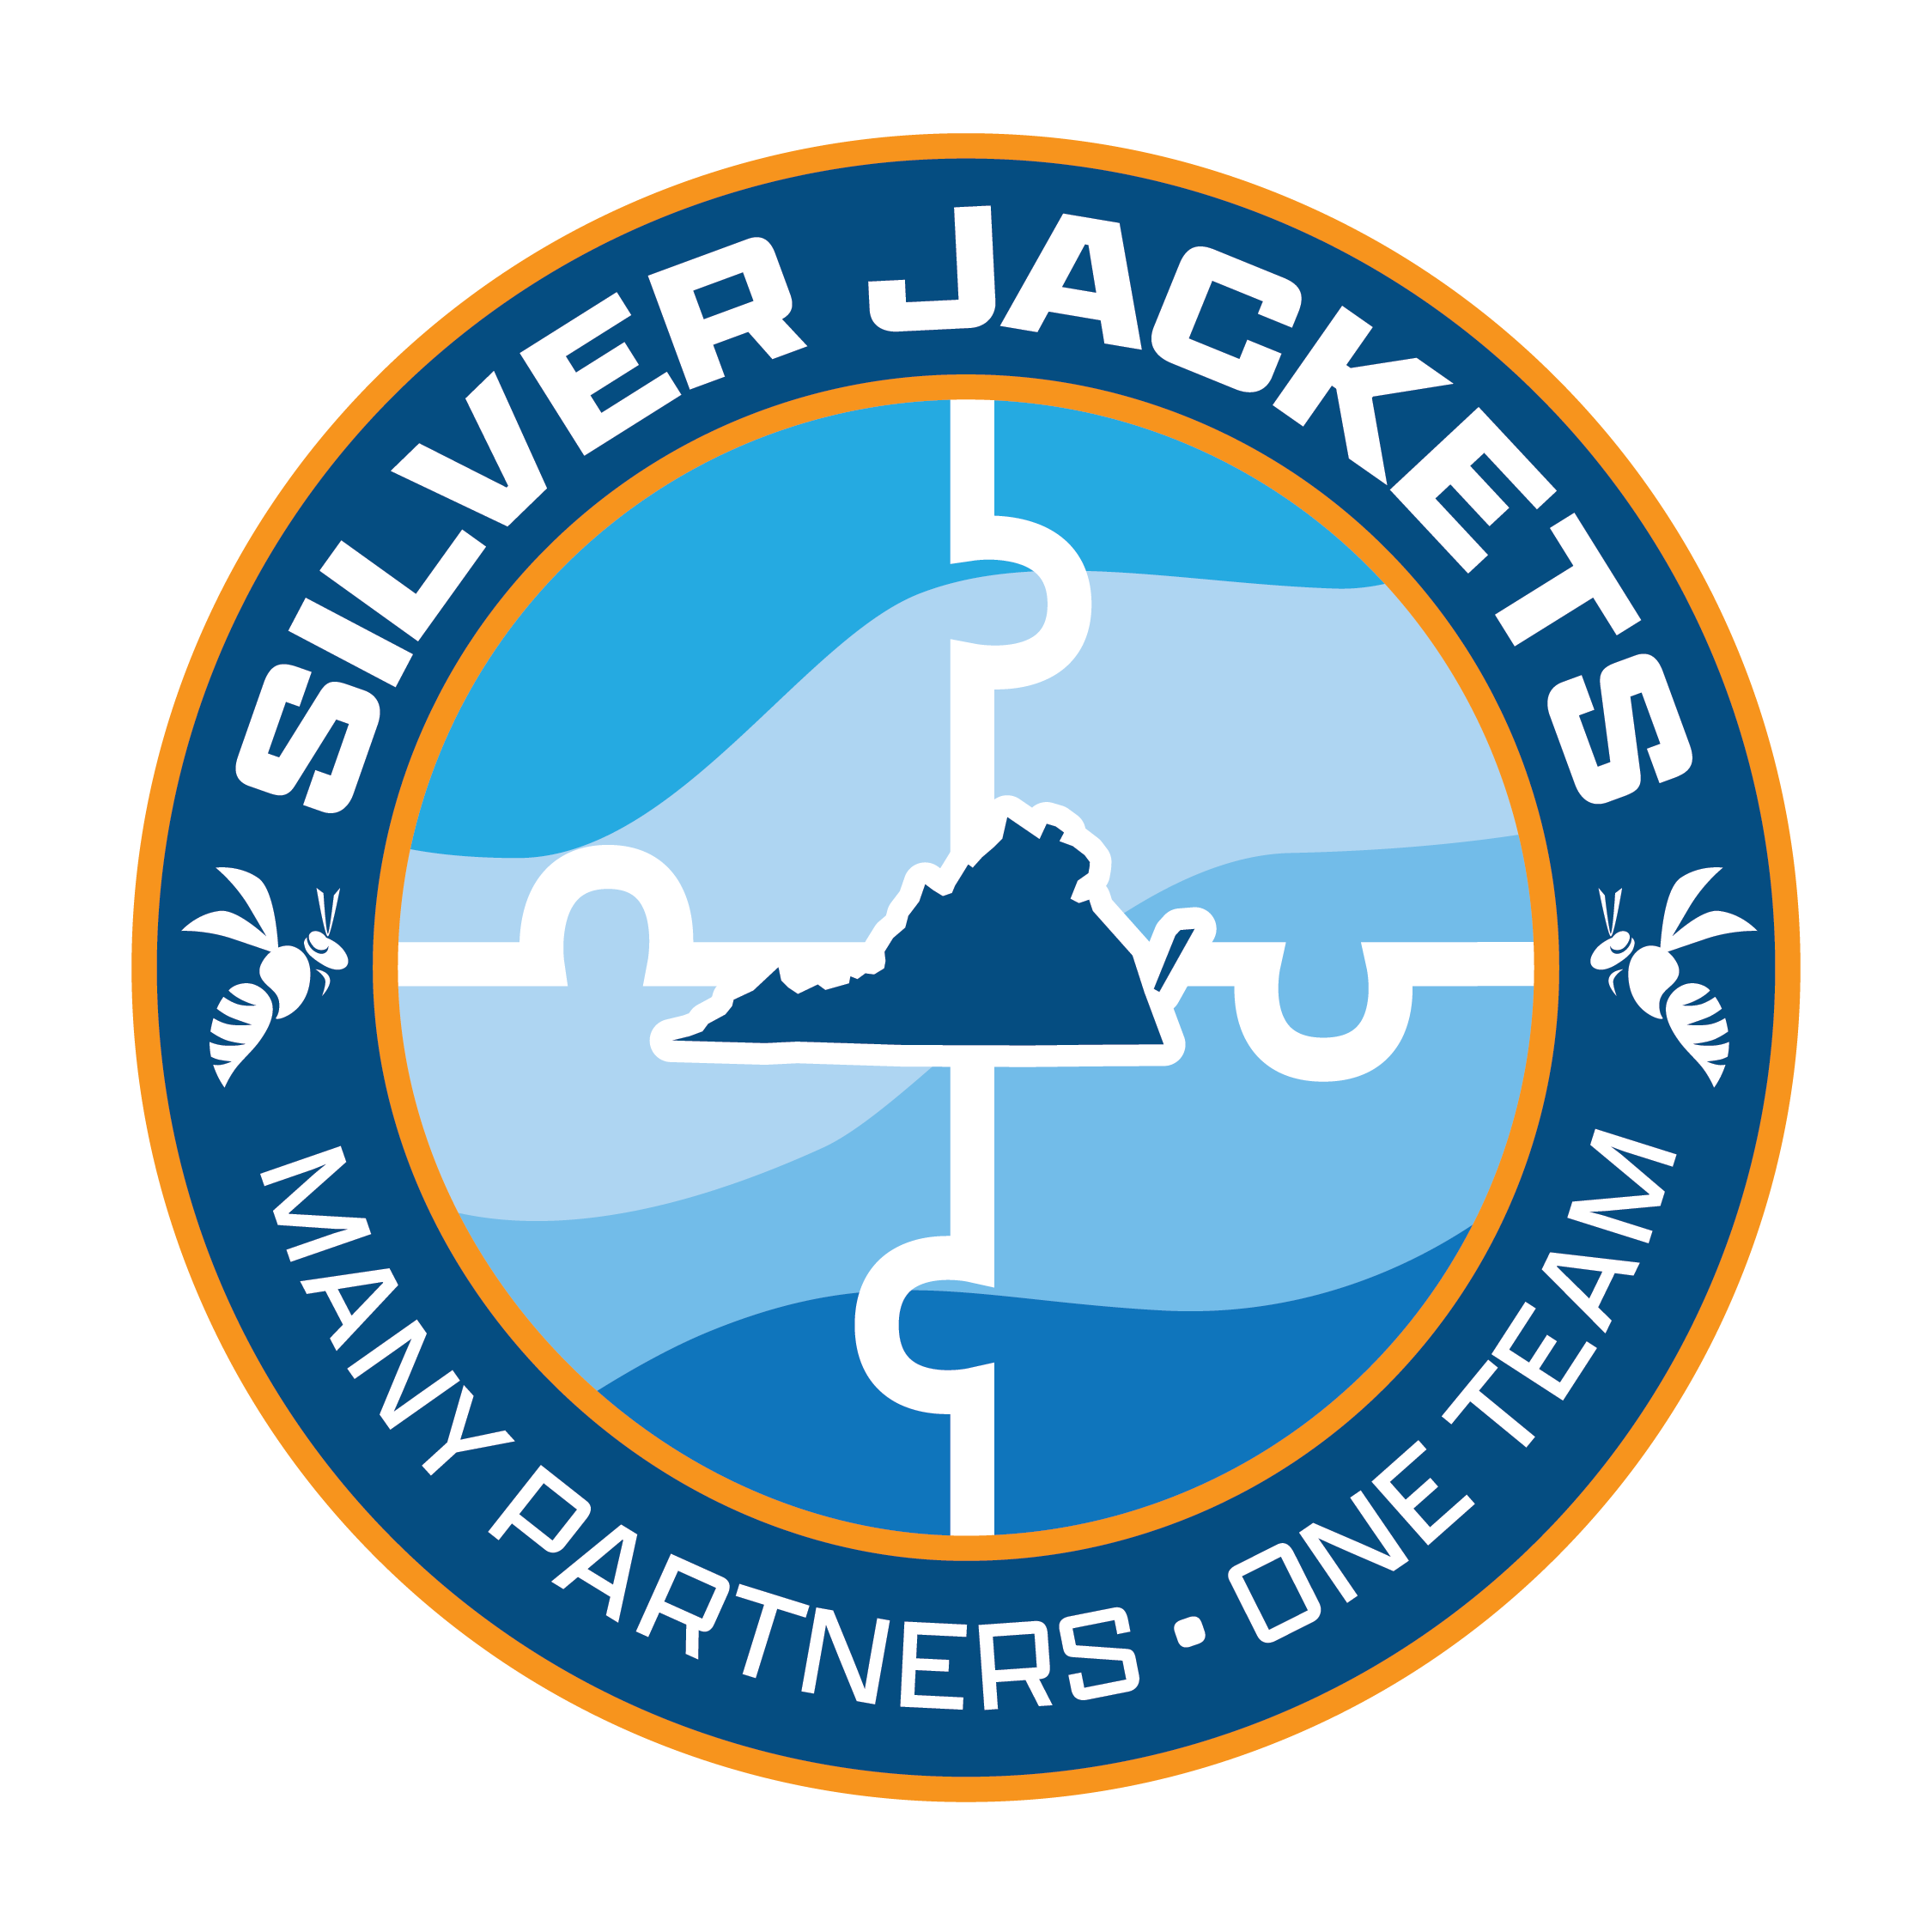 Virginia Silver Jackets logo